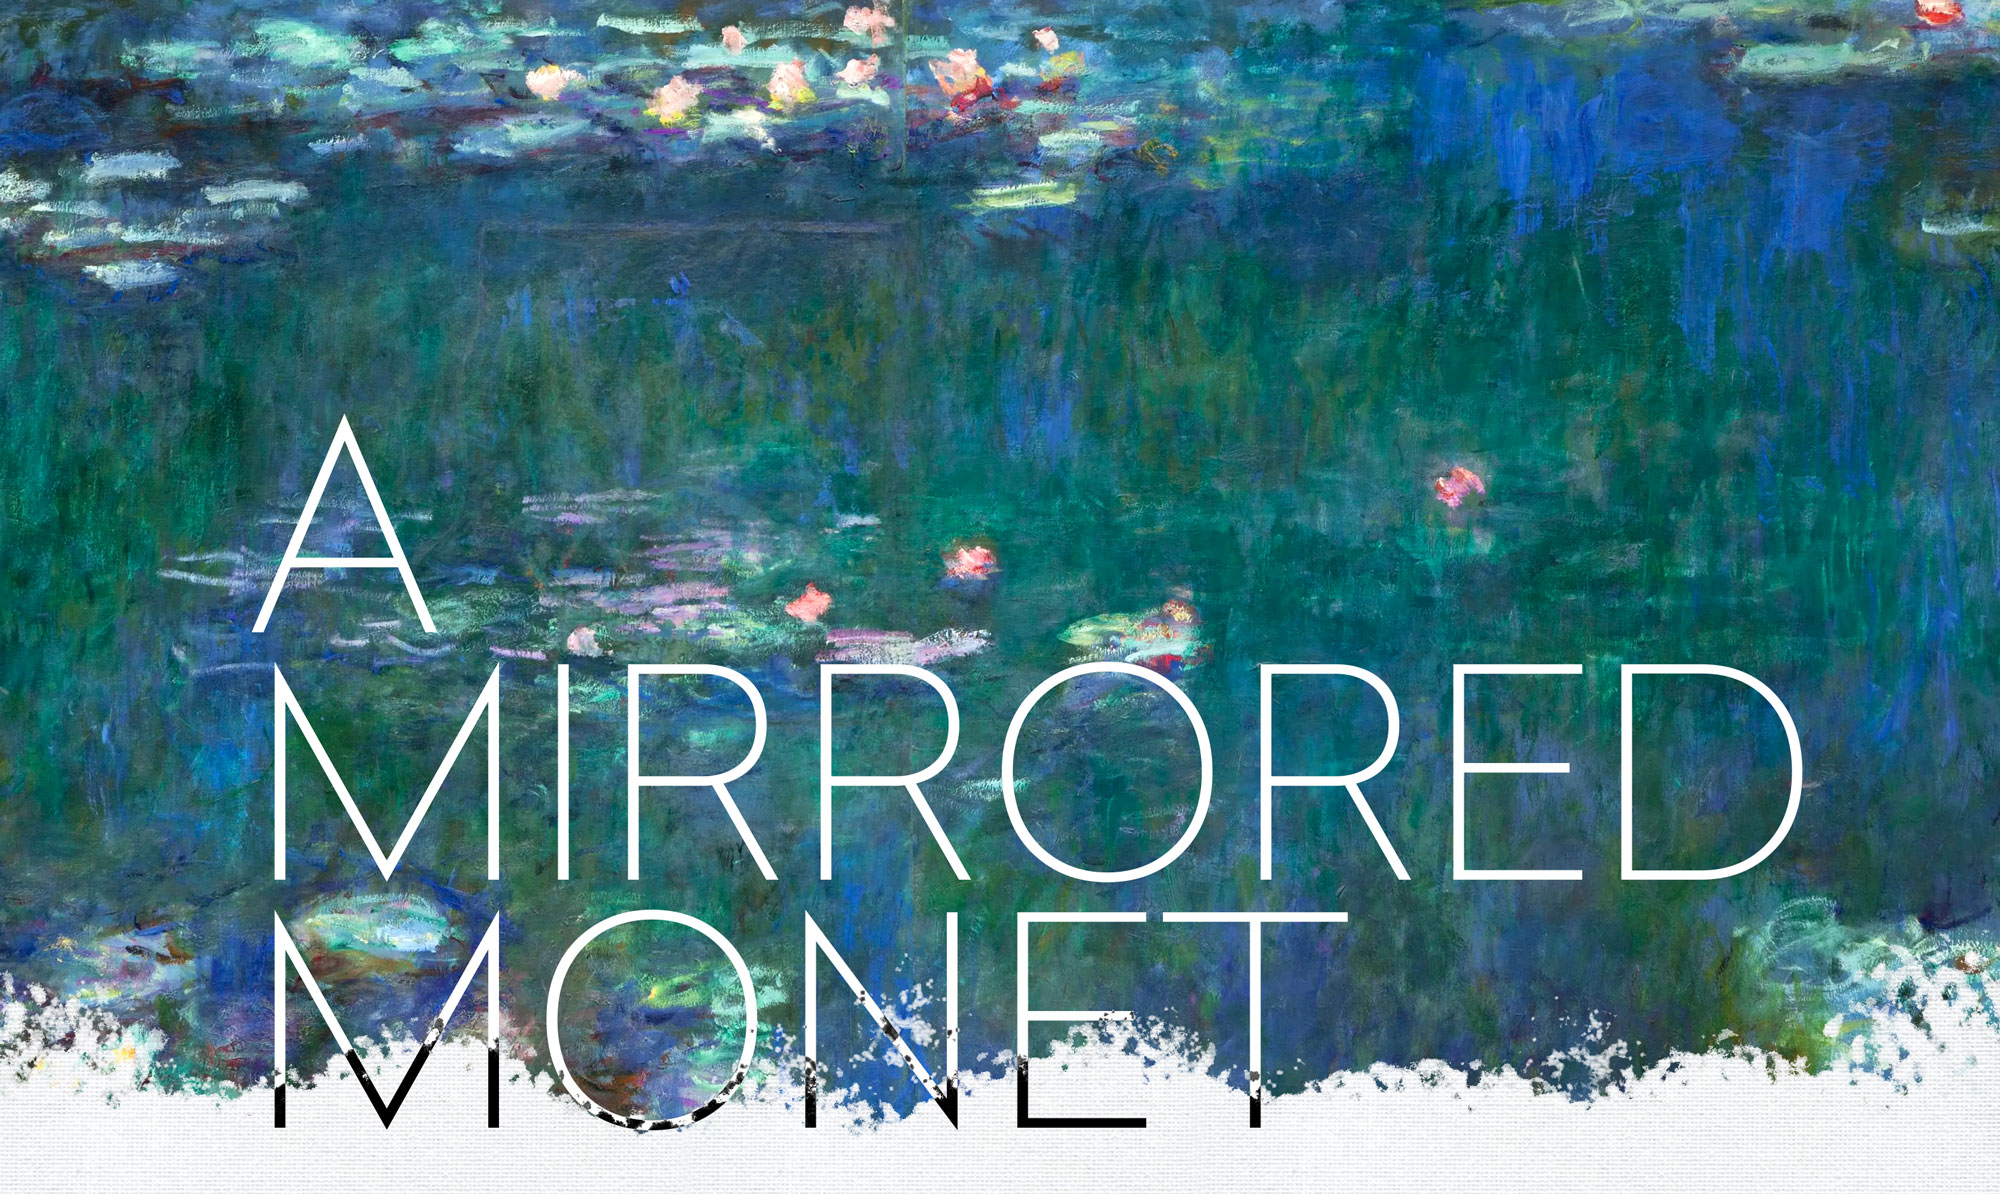 A Mirrored Monet show artwork